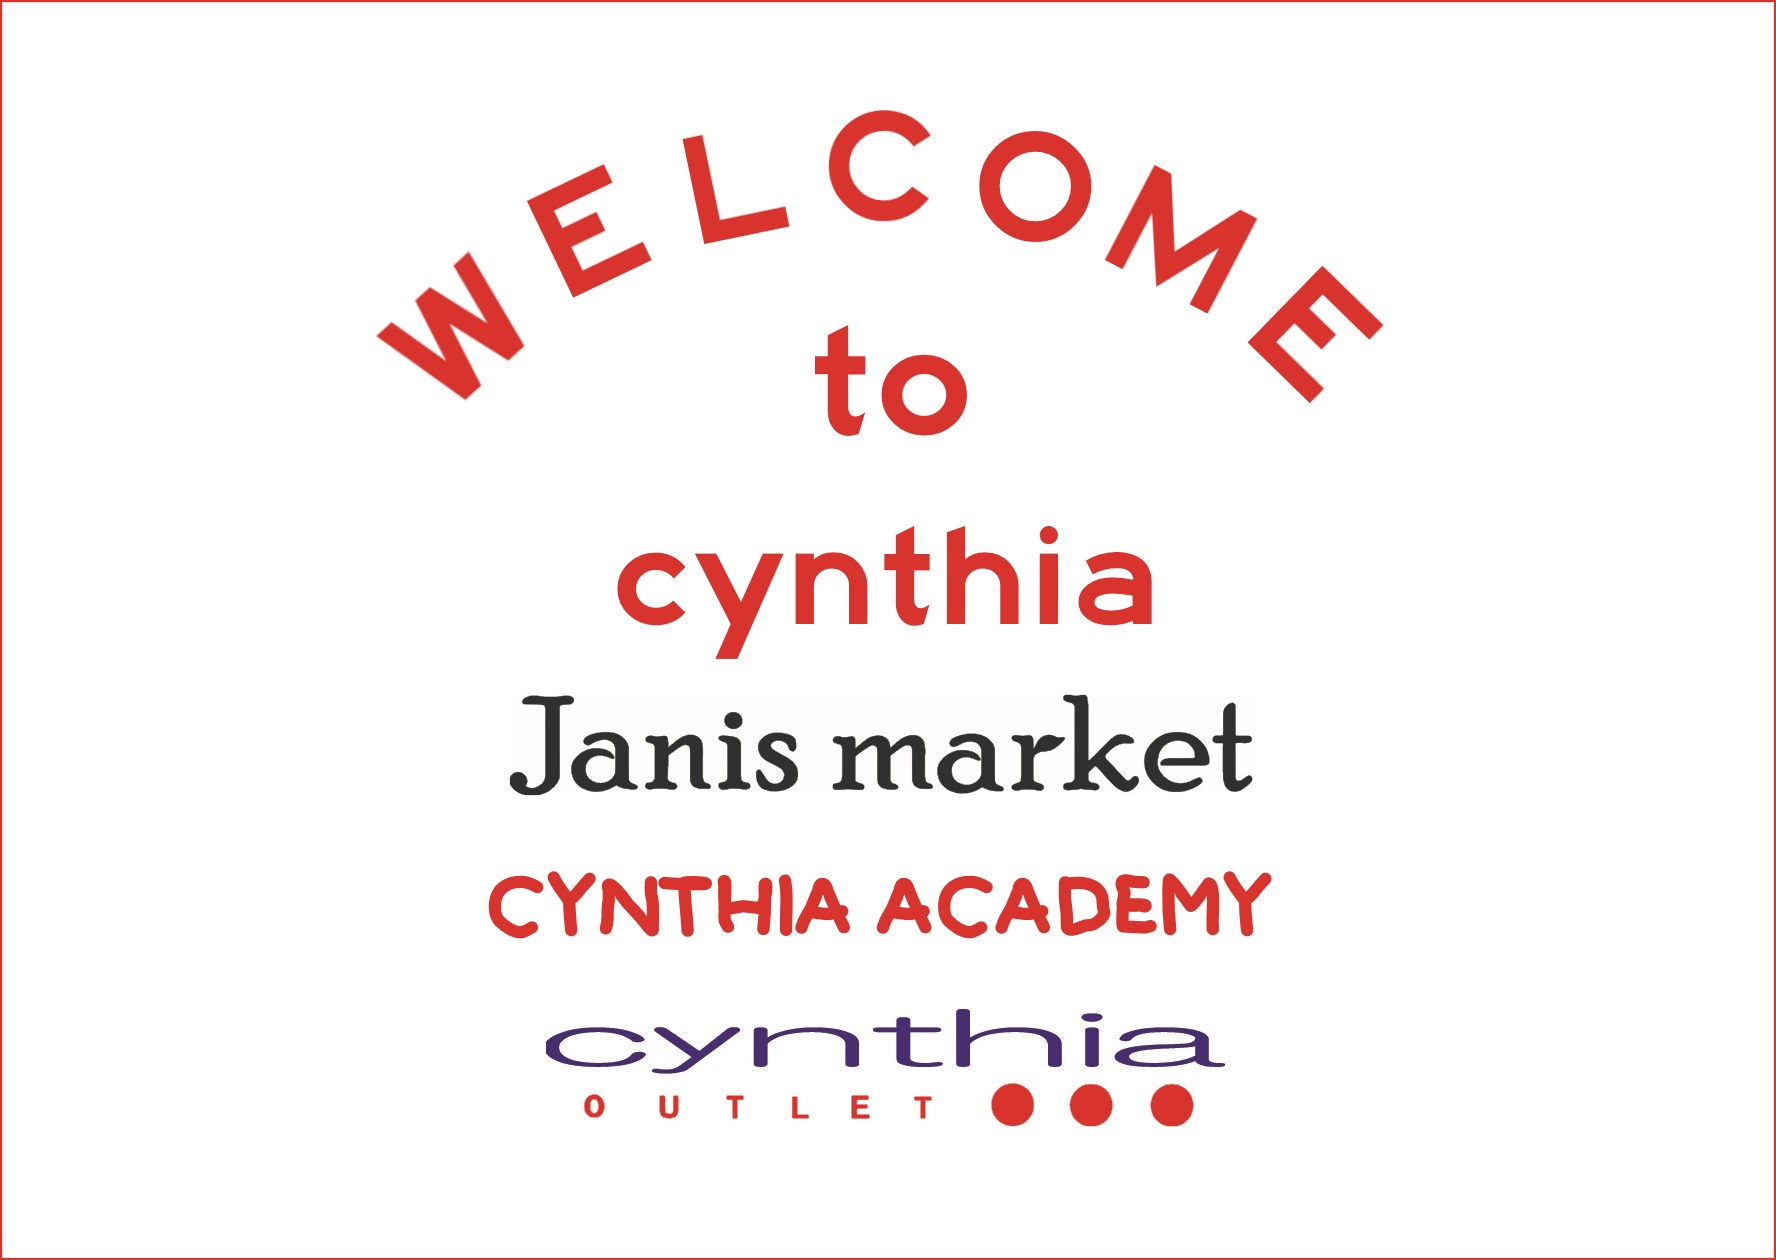 ◇ WELCOME TO CYNTHIA 第一弾 ◇